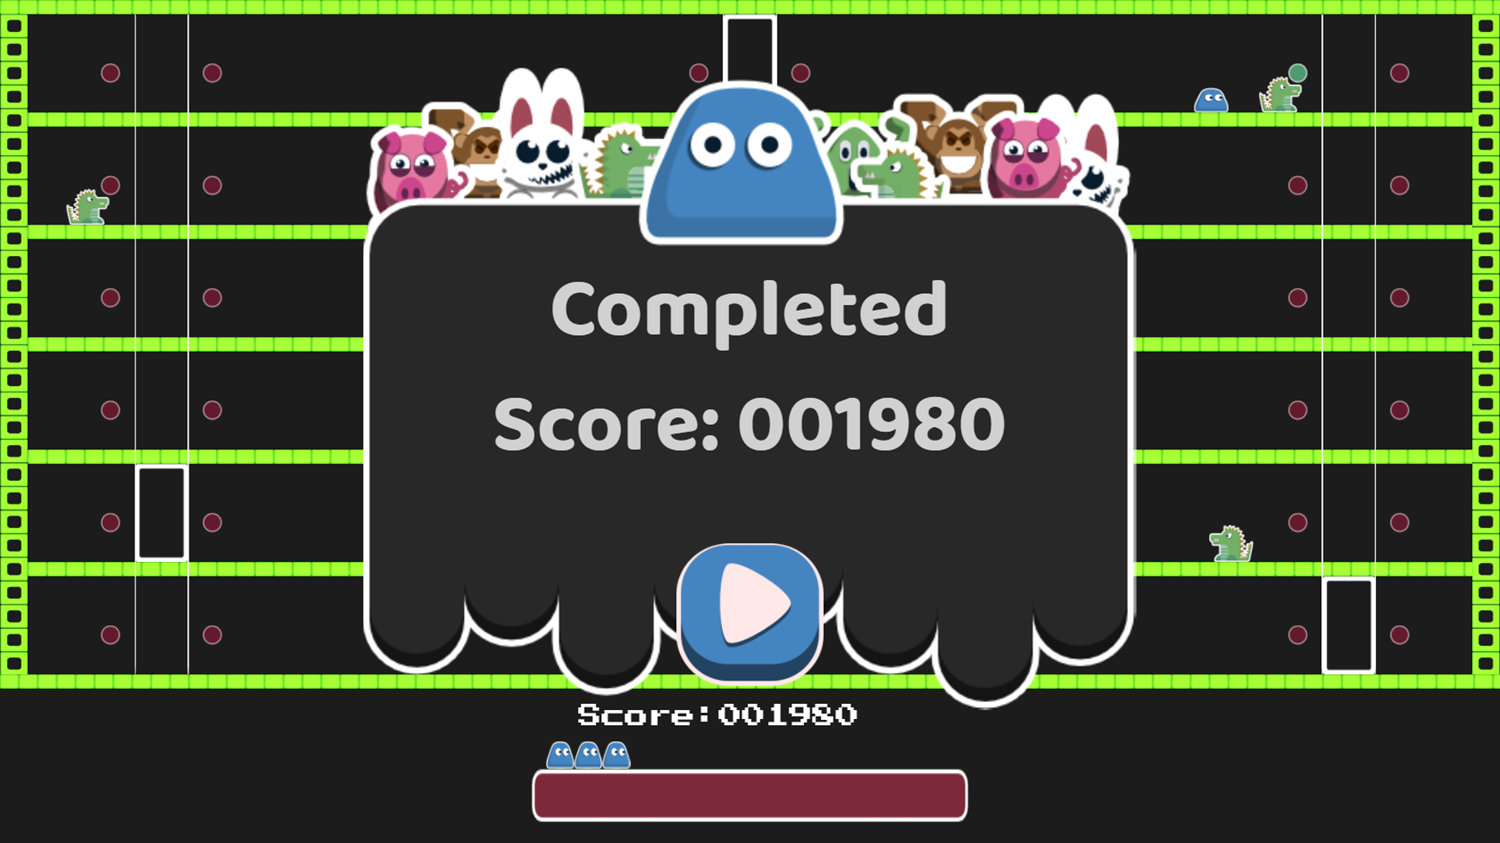 Escape Jelly Platformer Game Level Completed Screenshot.